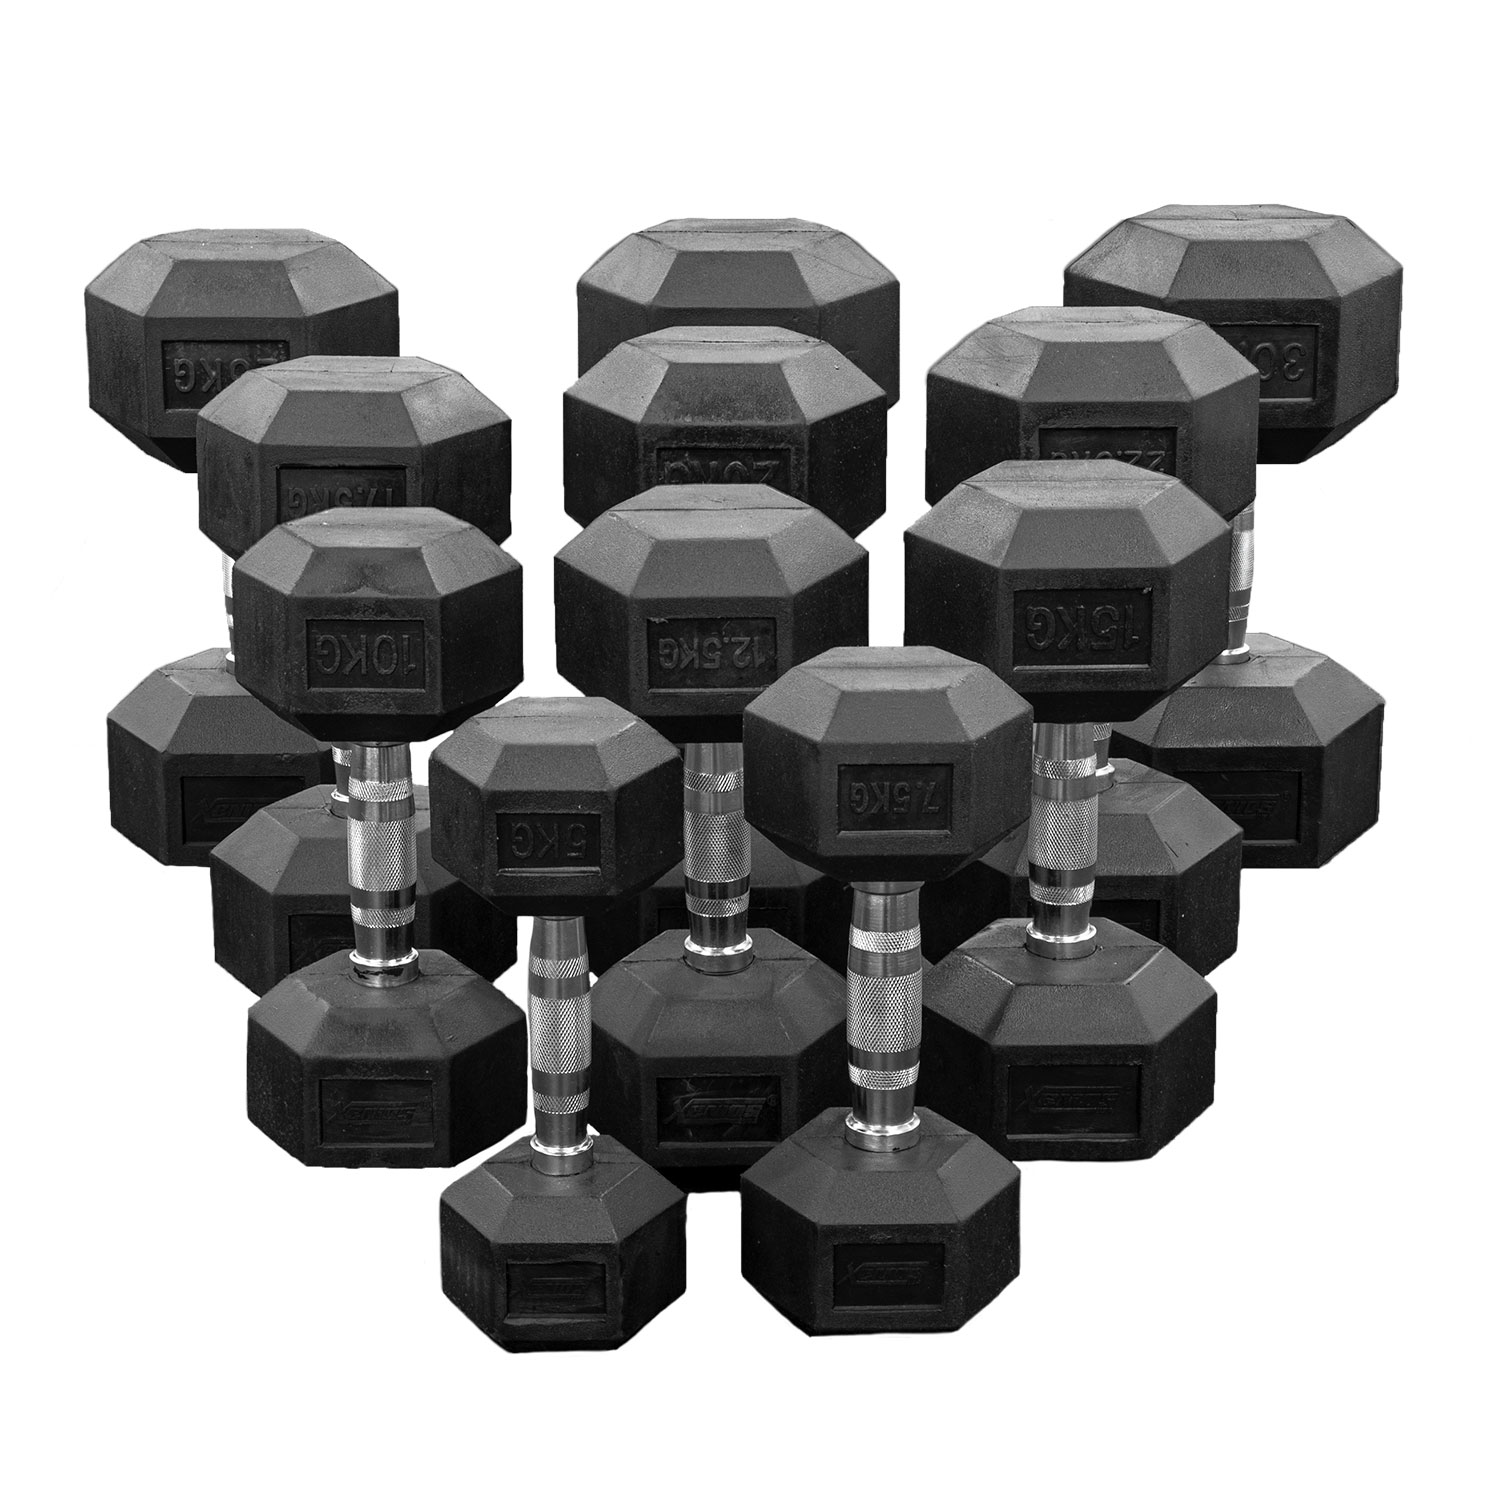 Mancuernas Hexagonales (12.5 Kg) por Unidad - MM Fitness